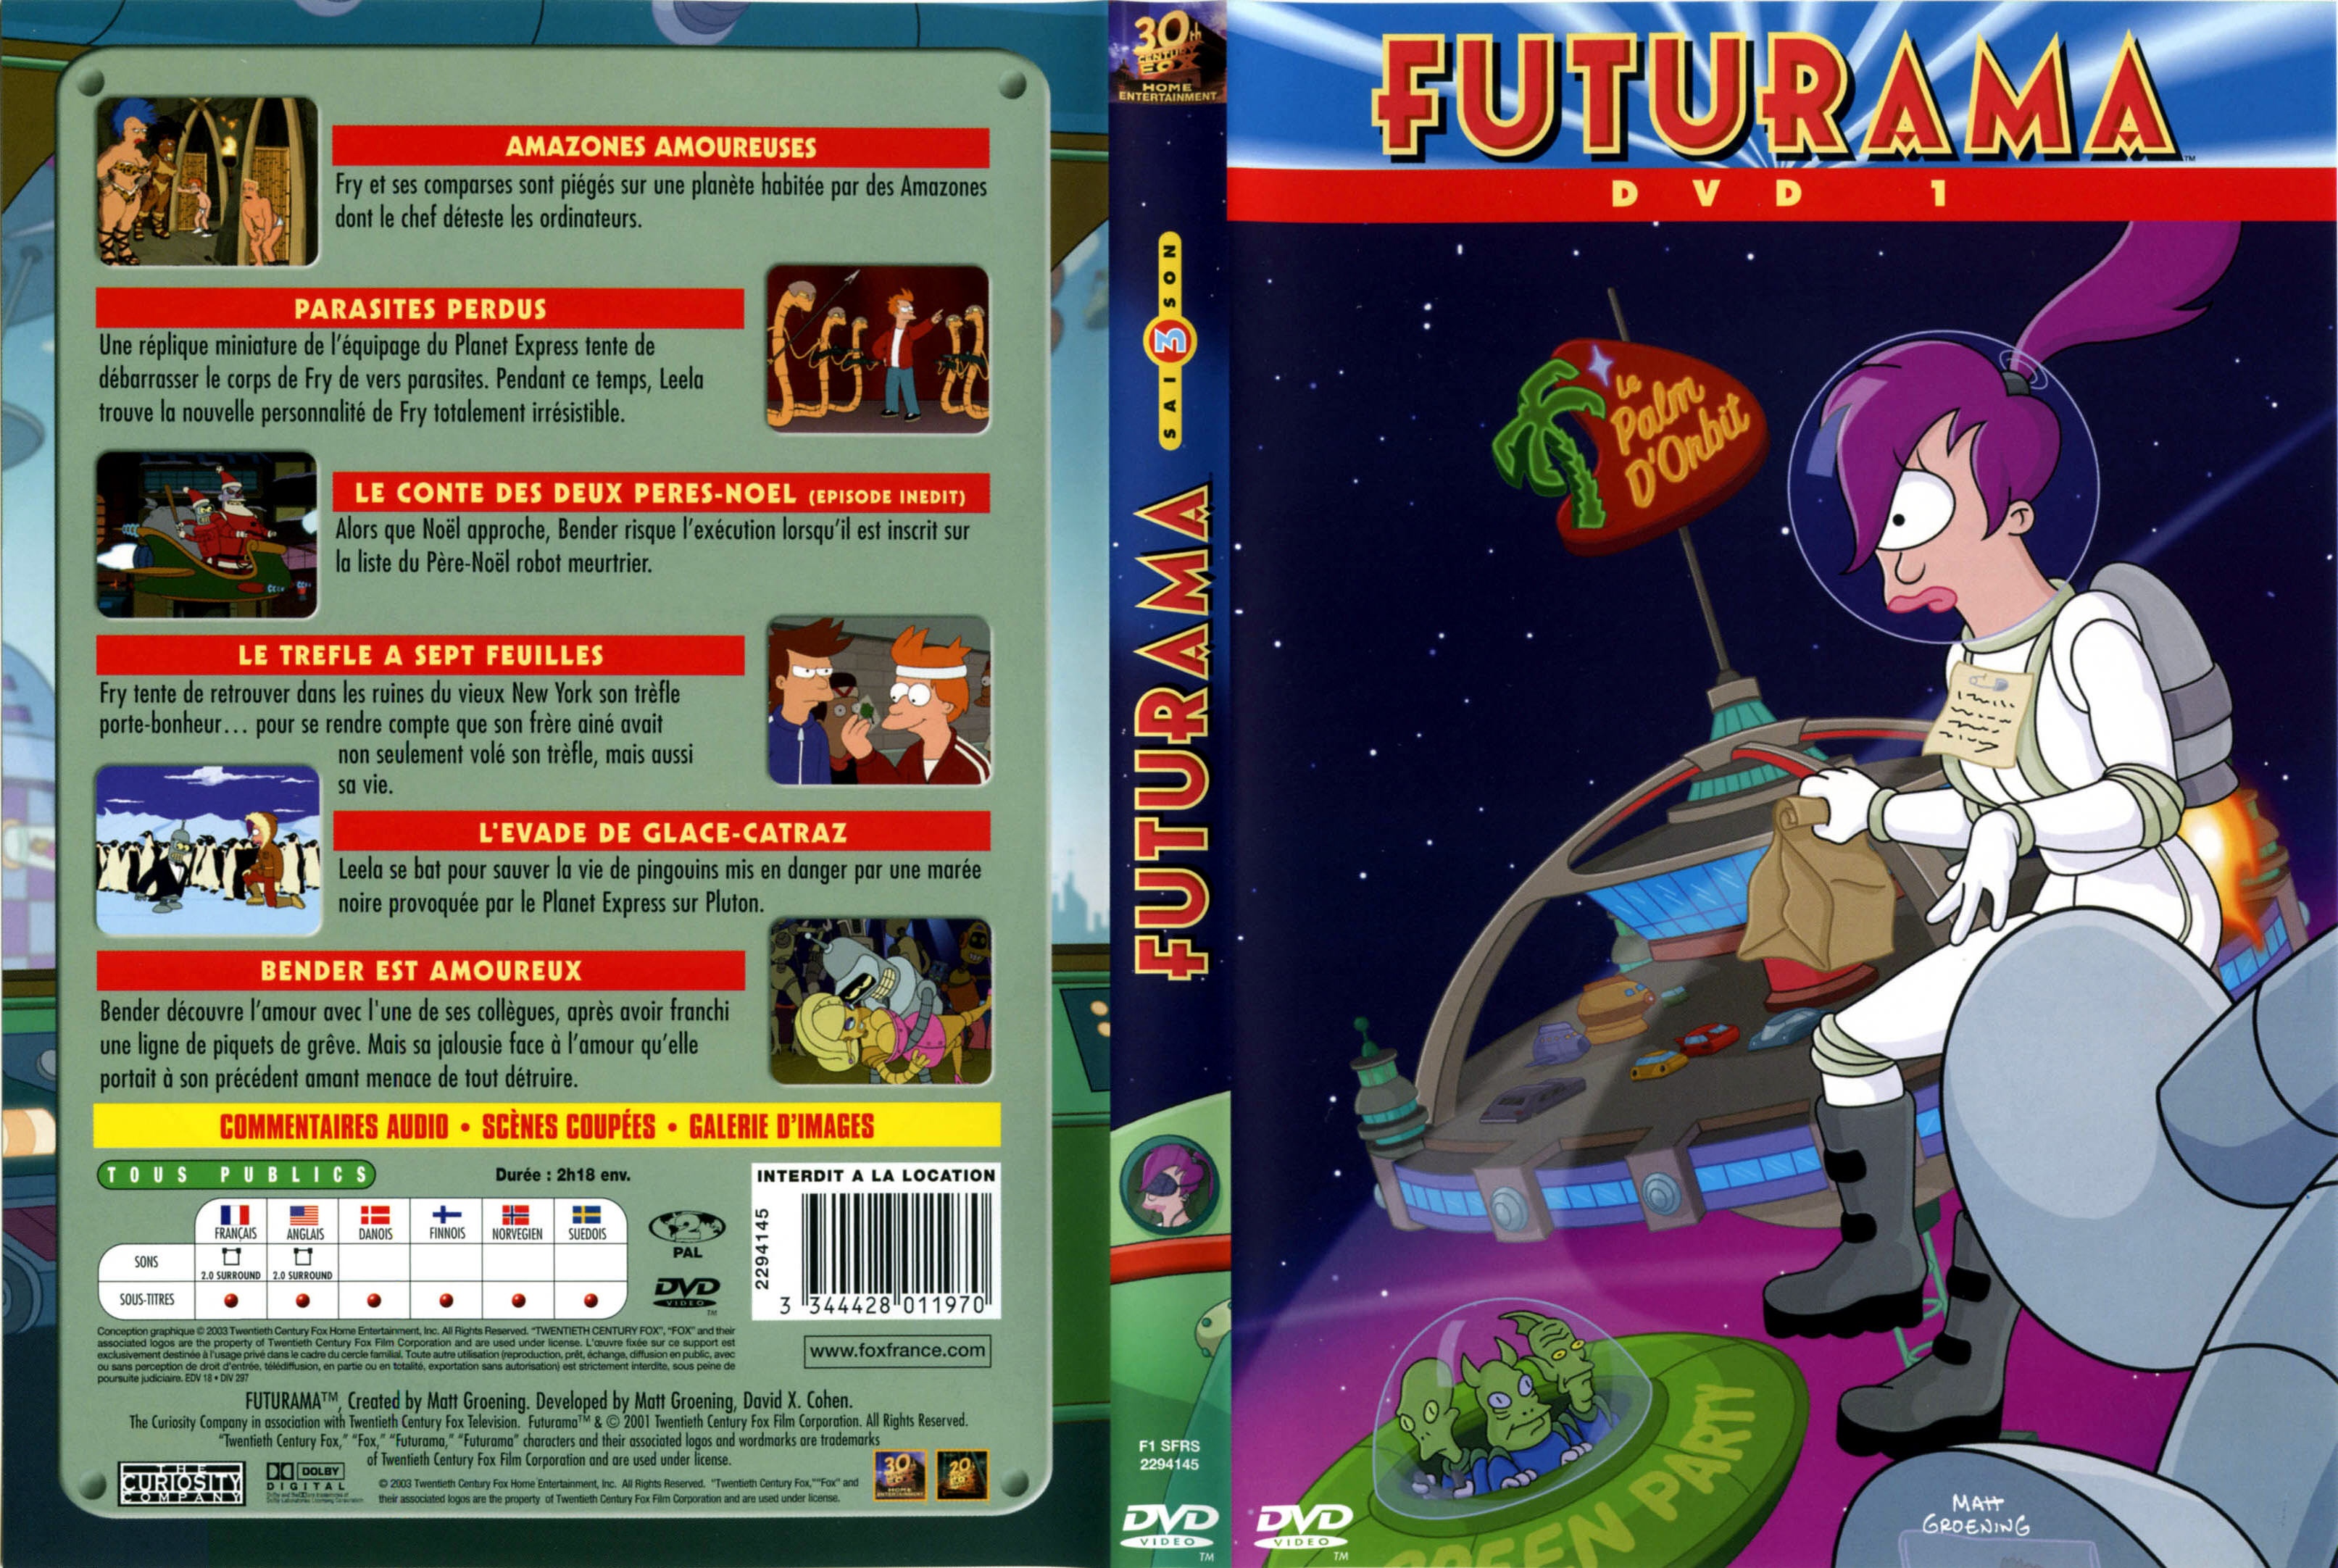 Jaquette DVD Futurama saison 3 DVD 1